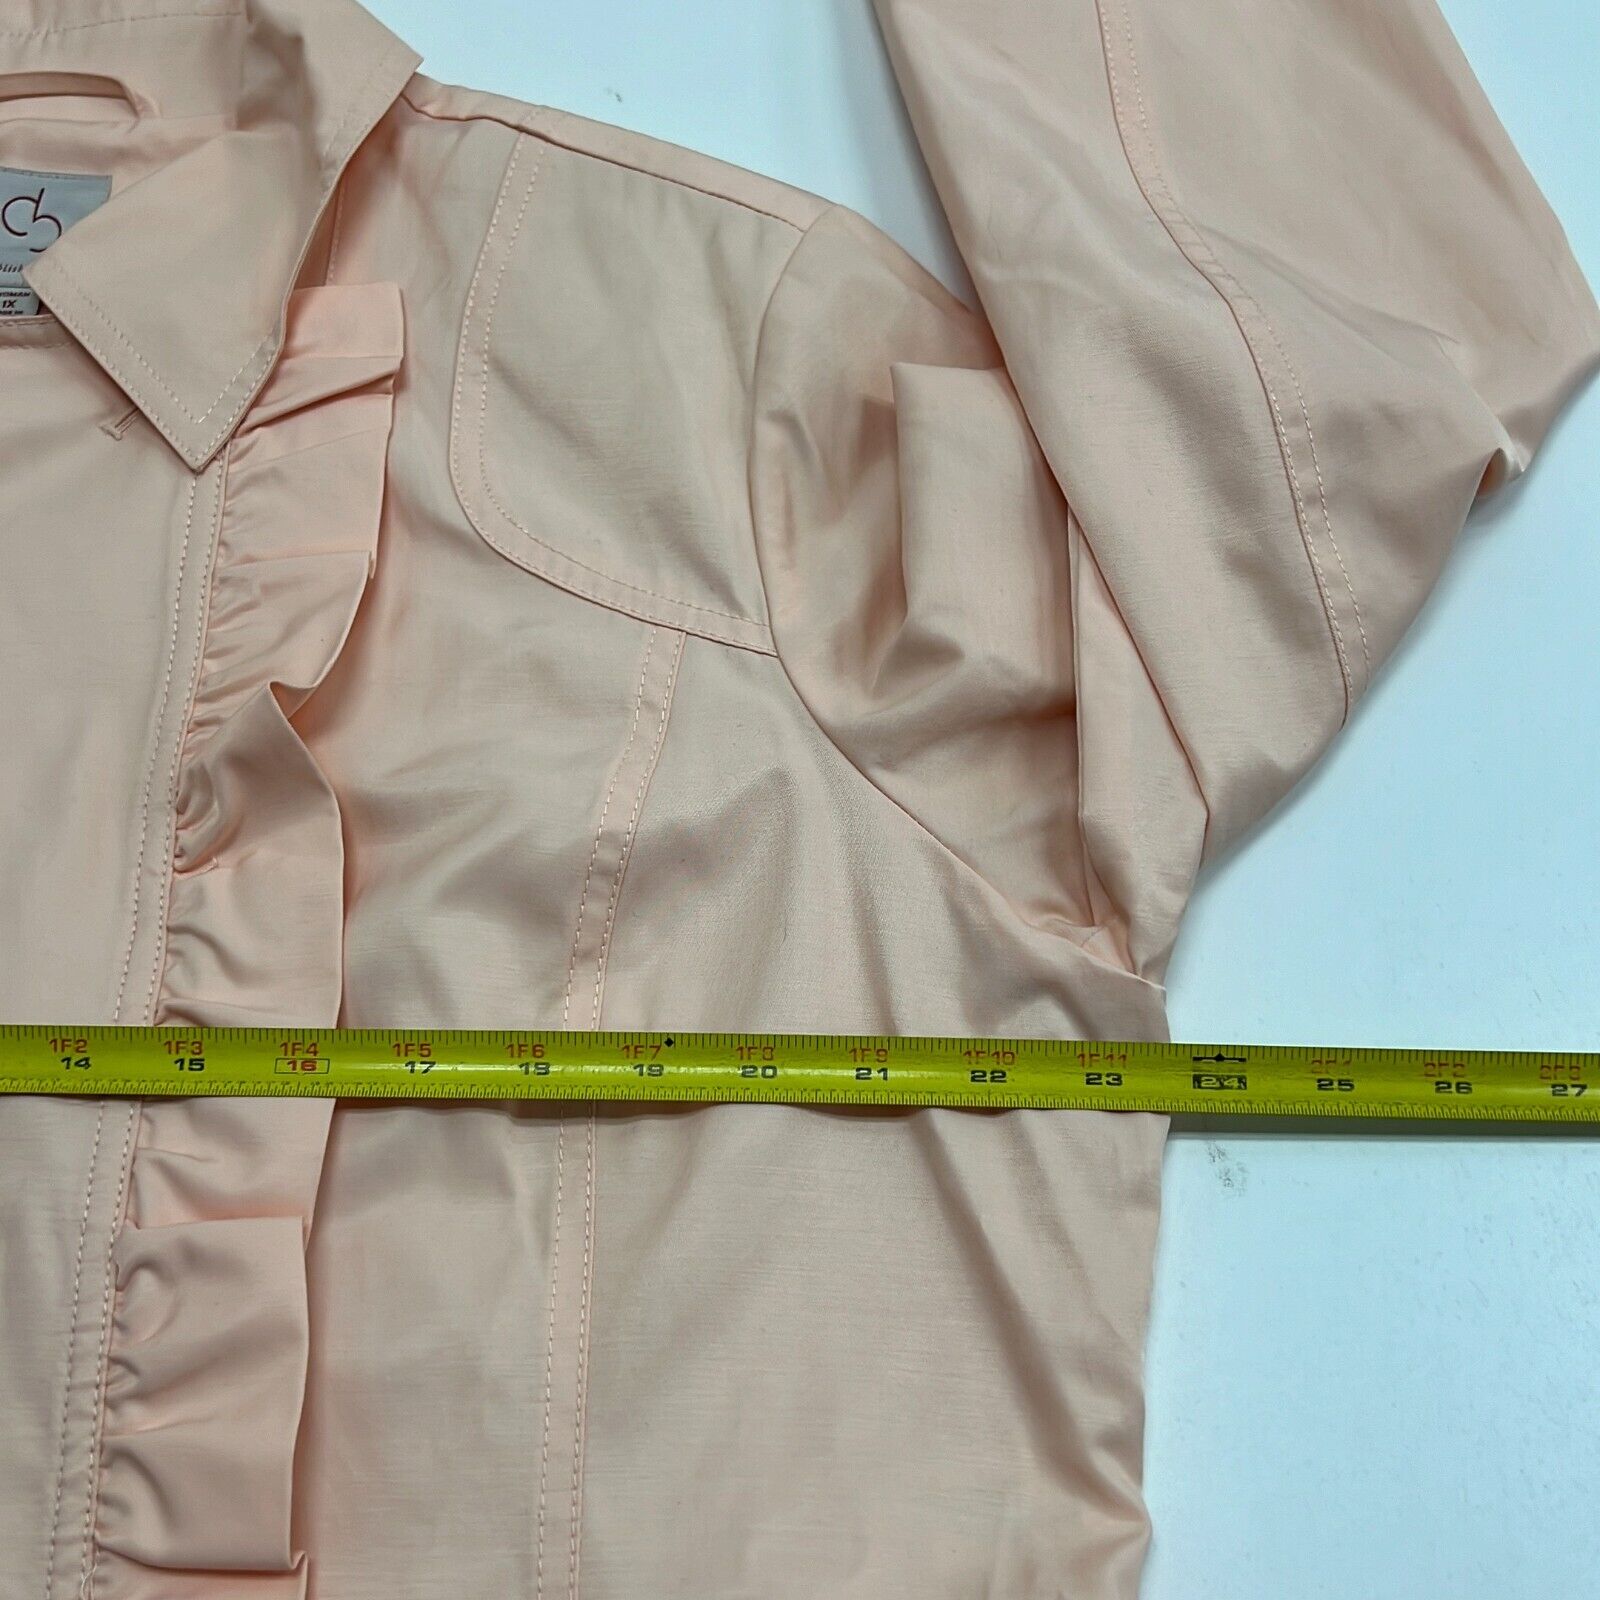 Dress Barn Women's Pink Long Sleeve Collared Ruffle Trench Coat Size 1X